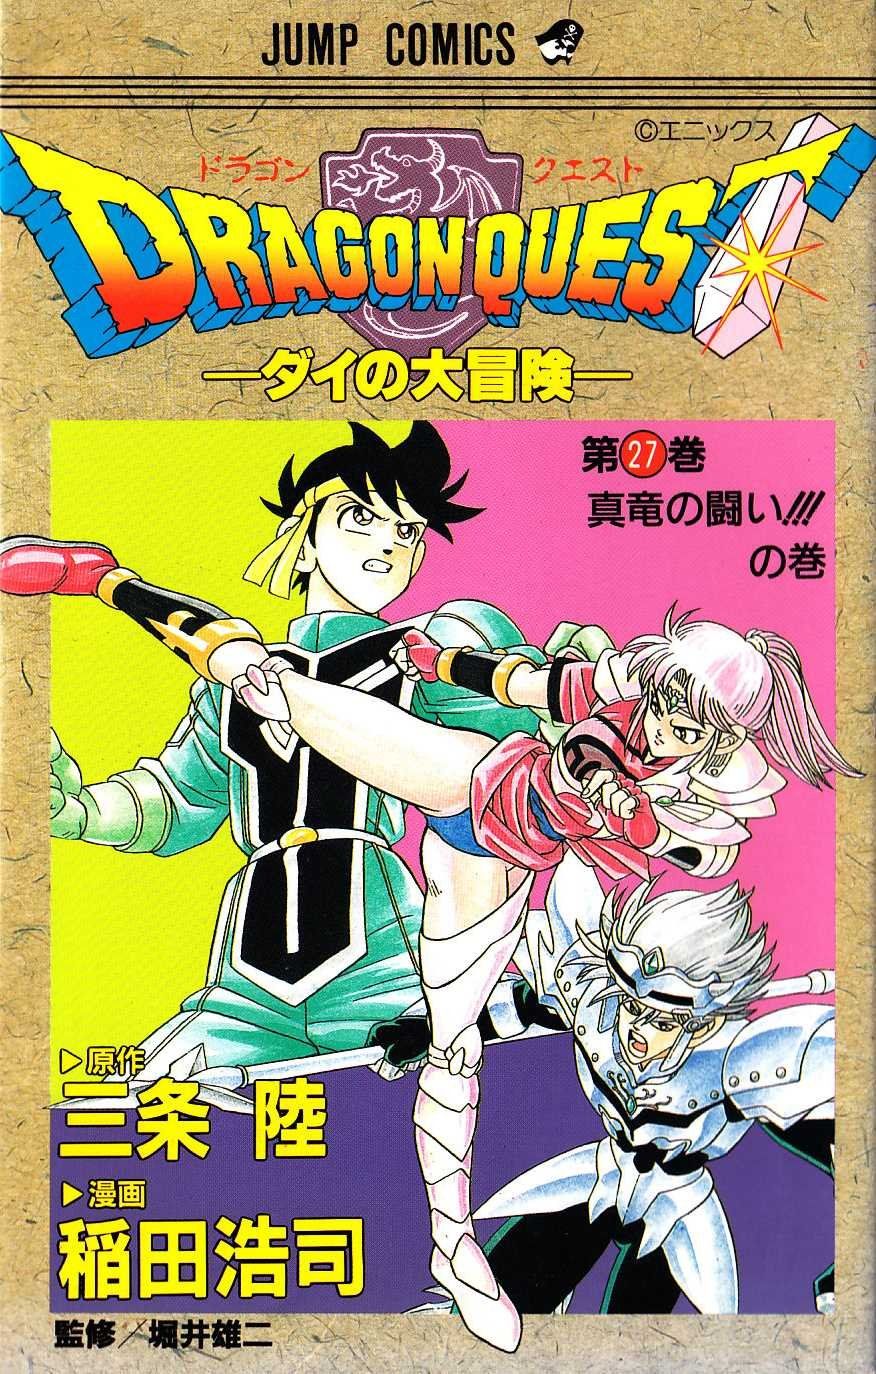 Dragon Quest no Daibouken Vol.27 (May 1995) Quest: Dai no Daibouken (The Adventure of Dai)